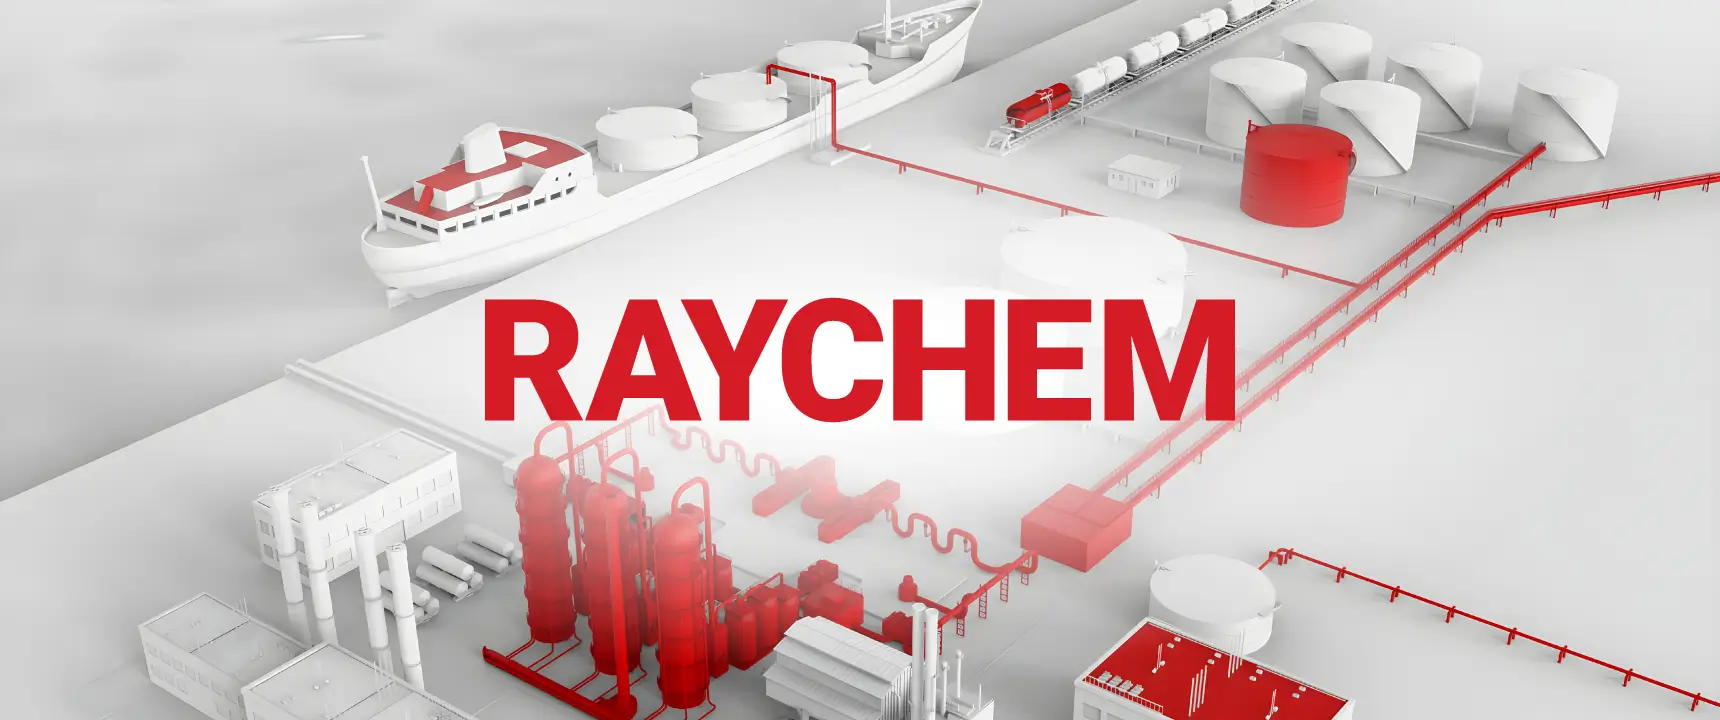 Raychem-Industrial-Heating-Products